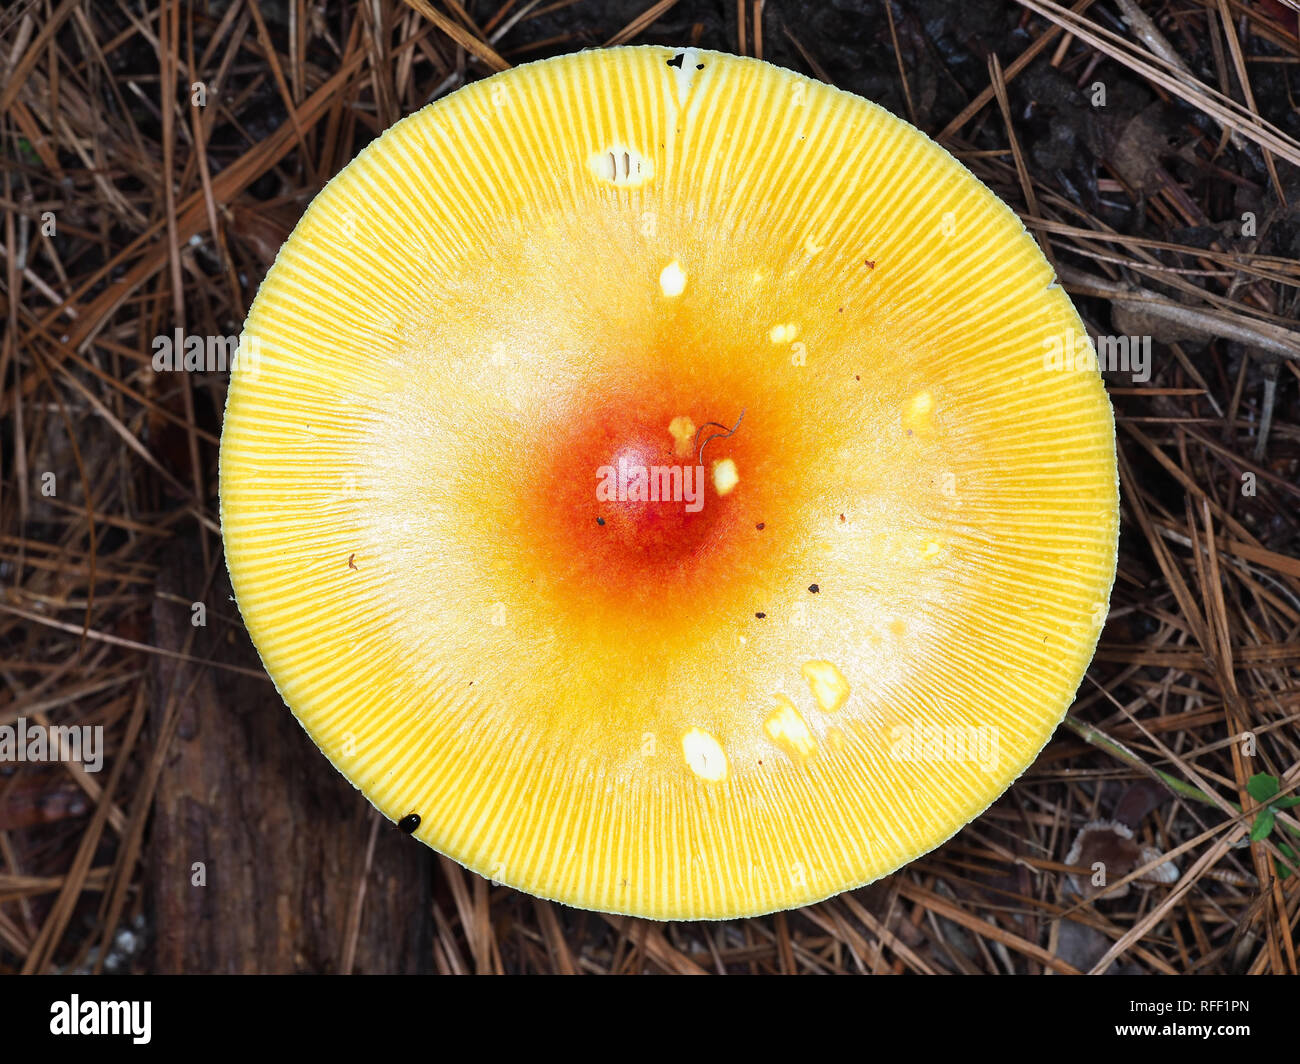 Brightly colored orange Amanita mushroom in Texas, USA Stock Photo